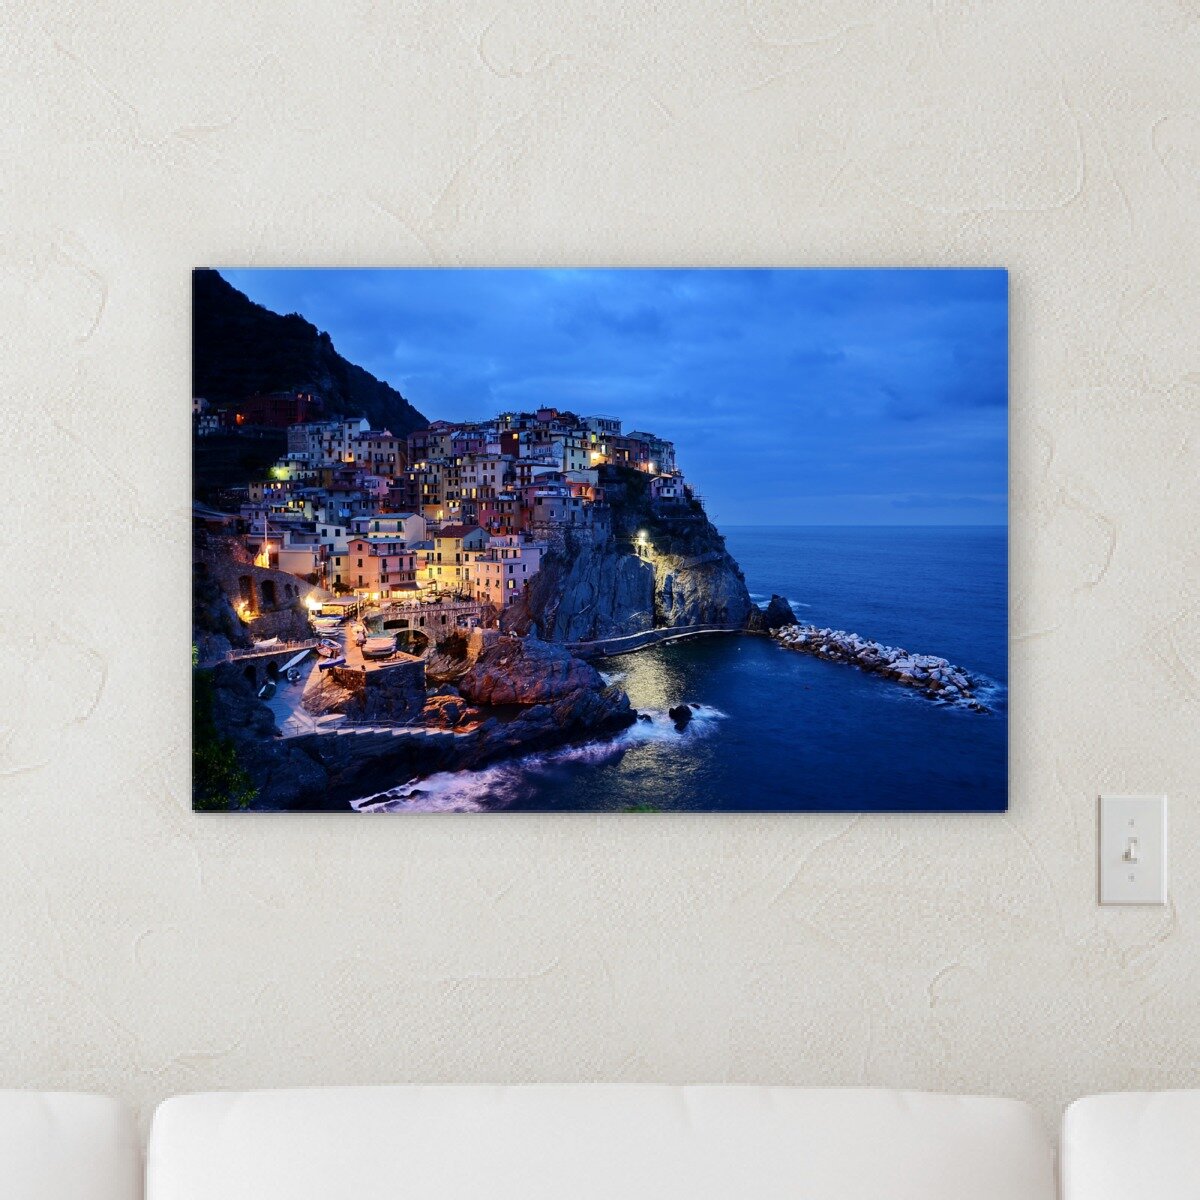 Ebern Designs Cinque Terre On Canvas Photograph | Wayfair